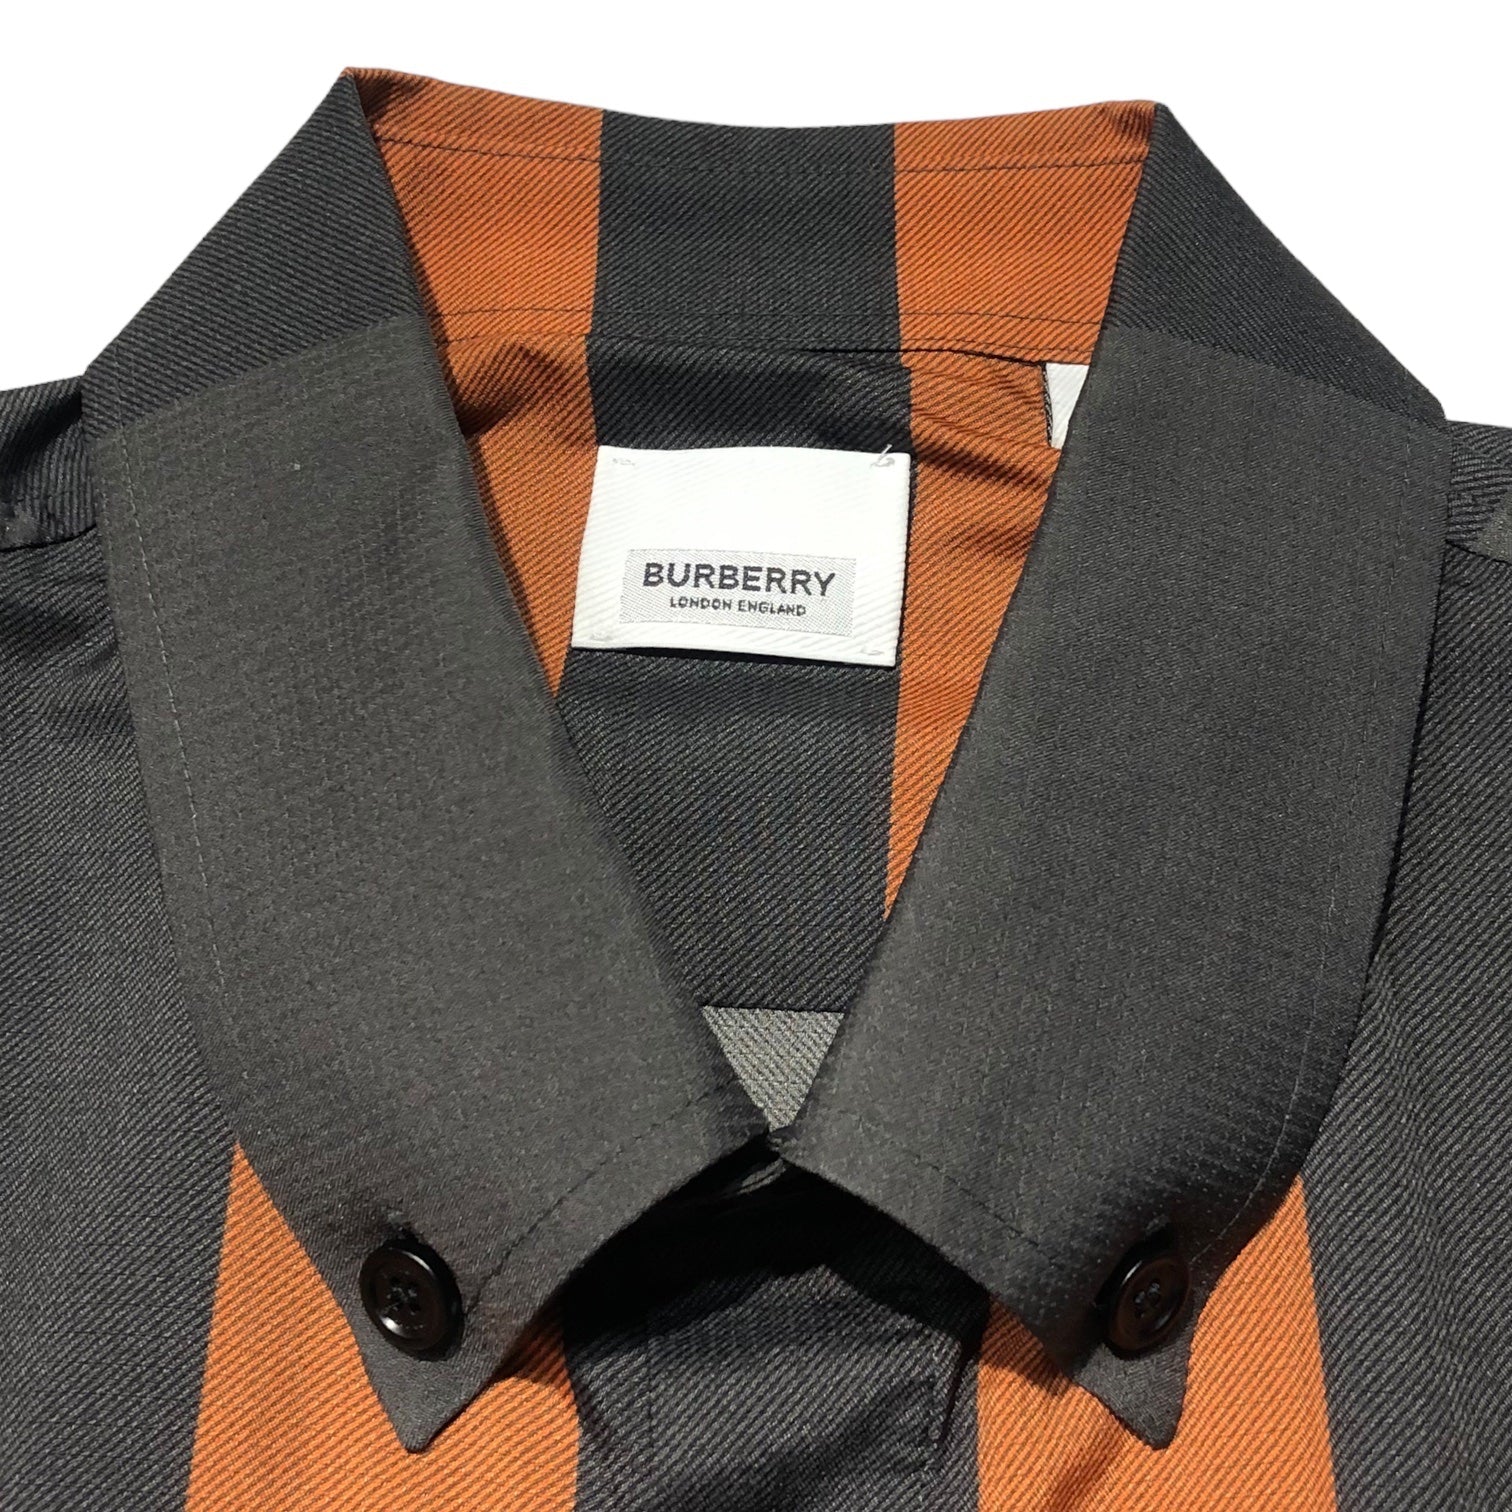 BURBERRY(バーバリー) check-print short-sleeve shirt チェックプリント 半袖 シャツ 8041532/71E M グレー×オレンジ